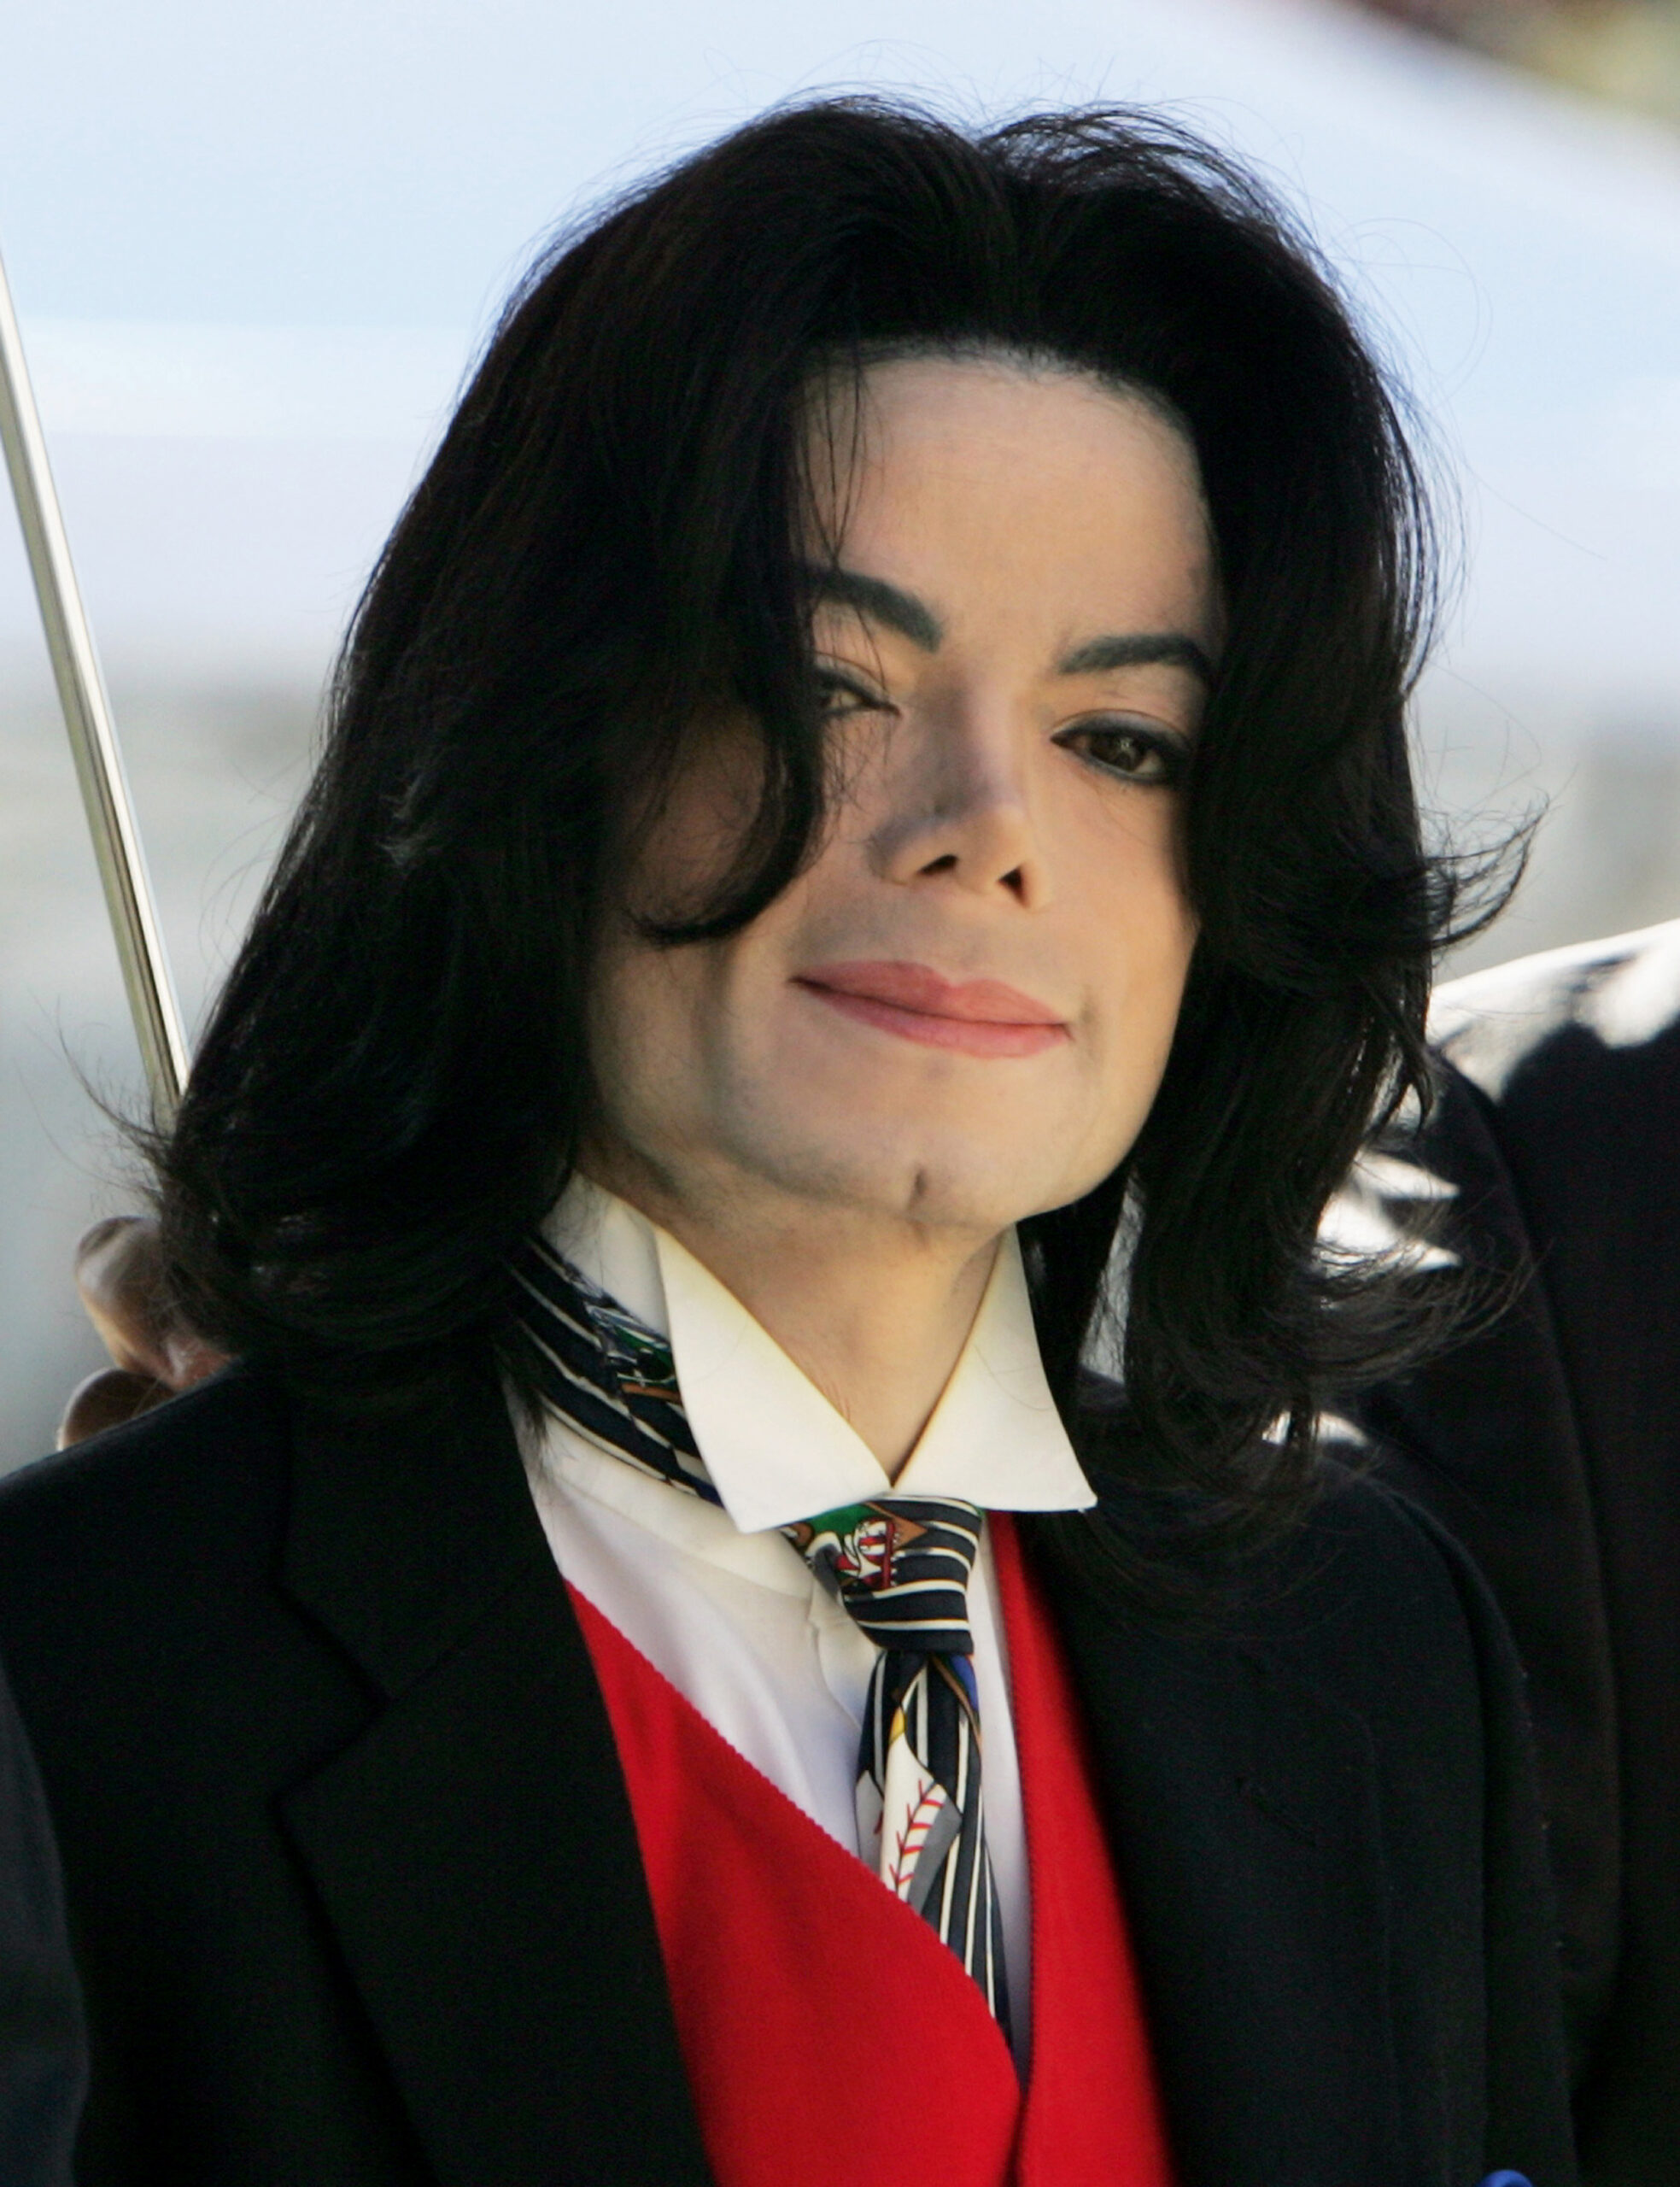 Michael Jackson arrives at the Santa Barbara County courthouse April 29, 2005 in Santa Maria, California